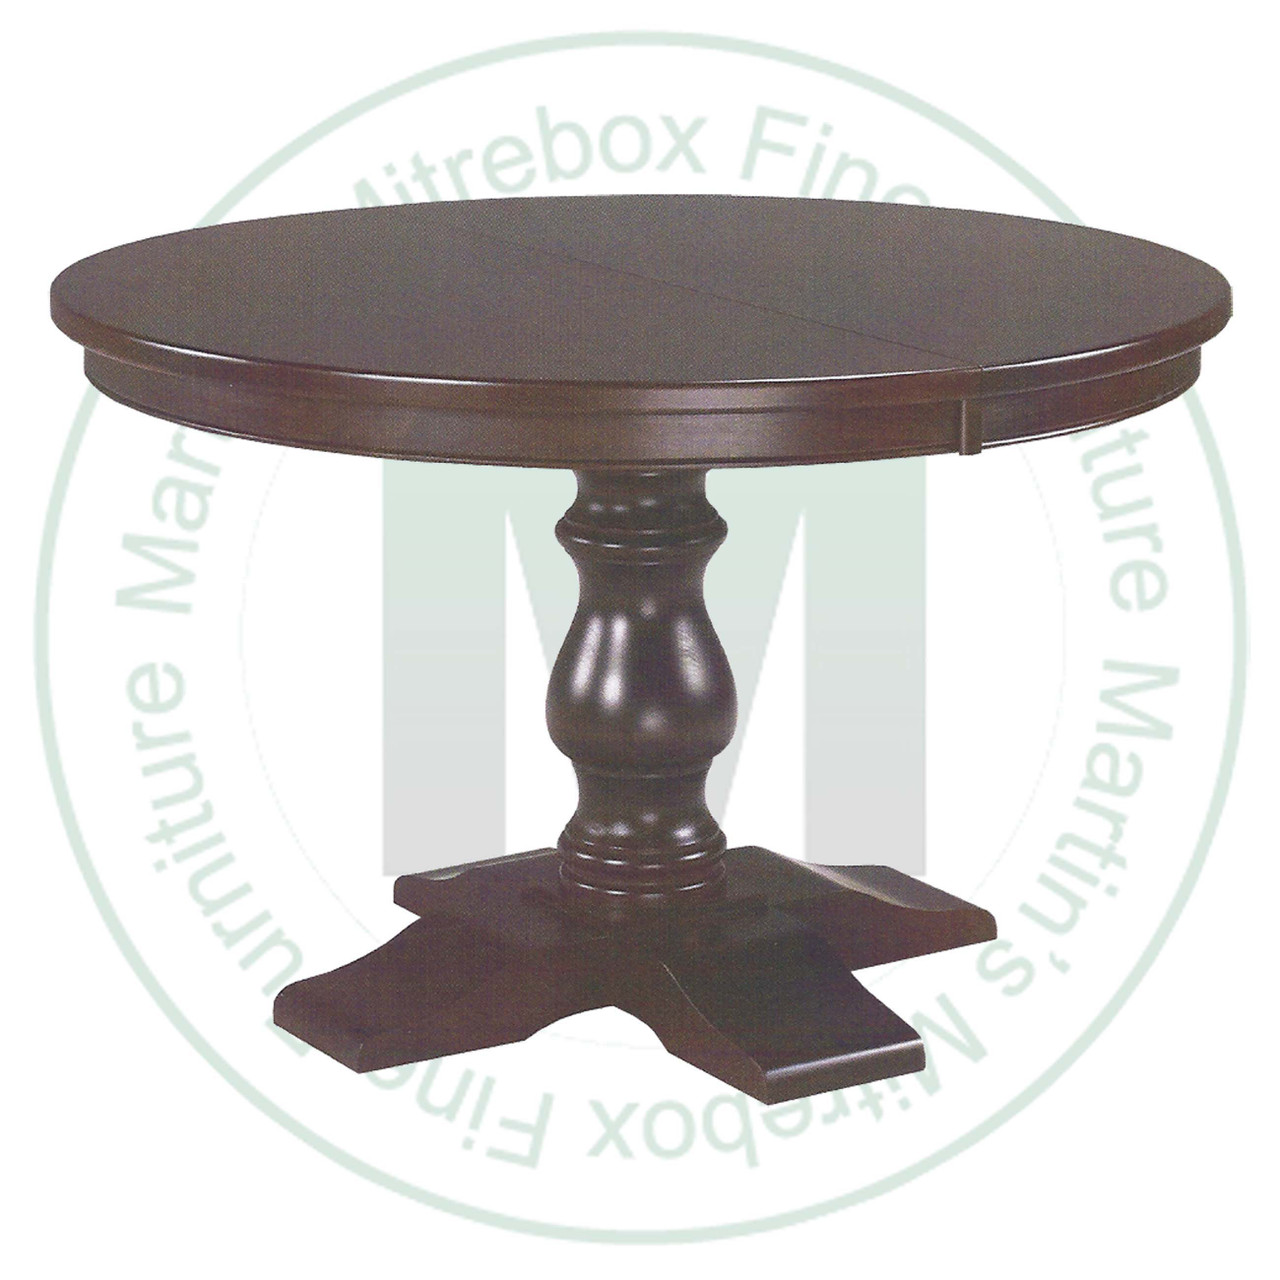 Wormy Maple Savannah Single Pedestal Table 36''D x 36''W x 30''H With 1 - 12'' Leaf Table